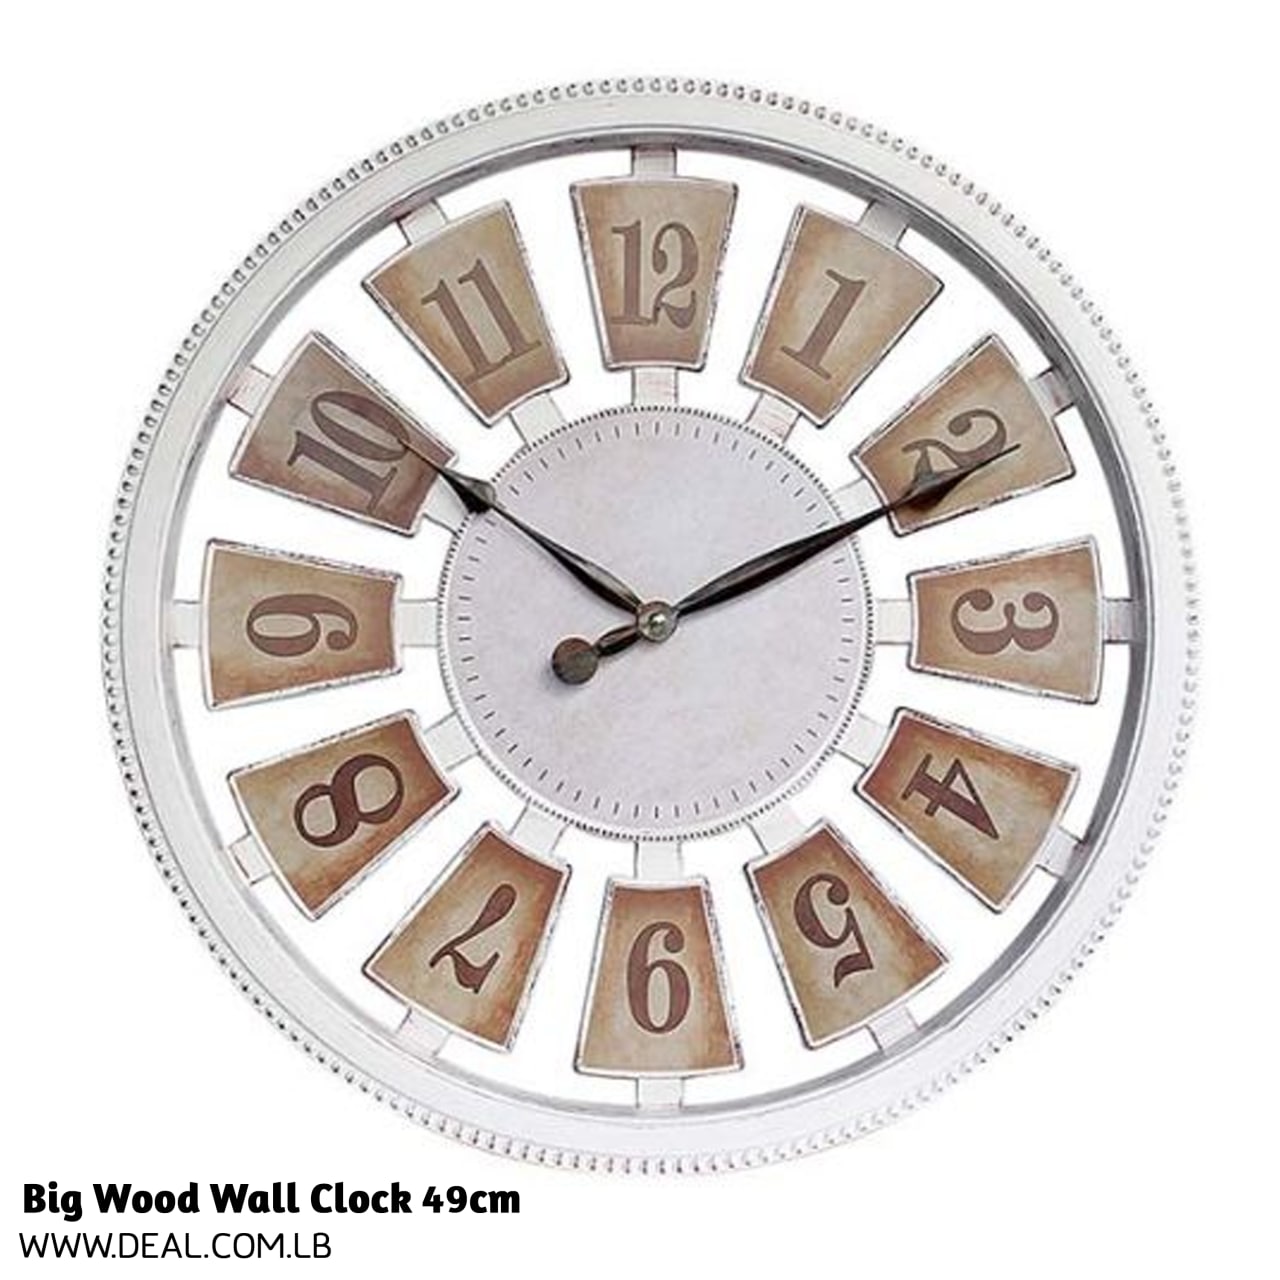 Big Wood Wall Clock 49cm